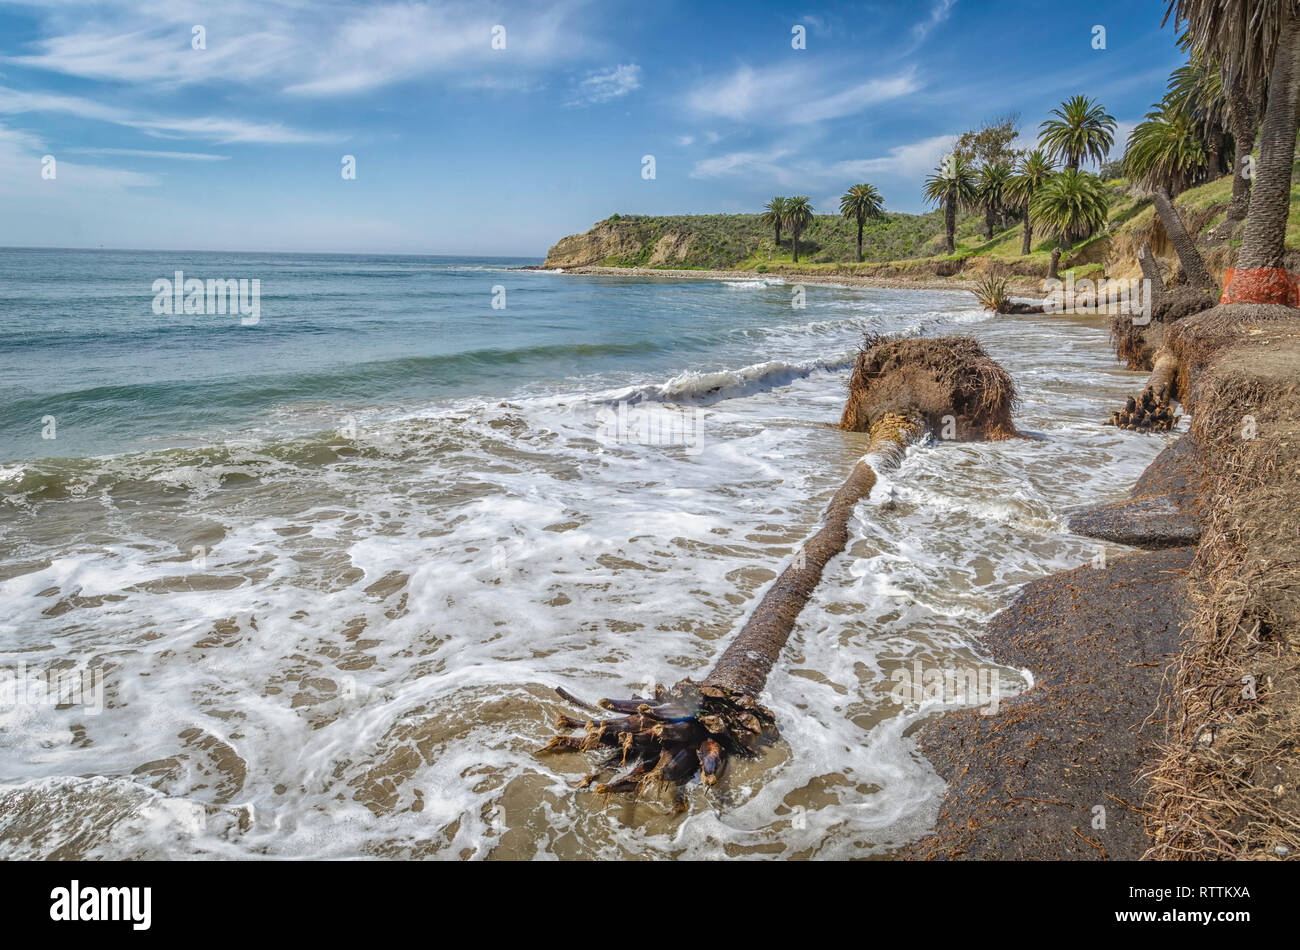 A fallen palm tree lies on the sand at Refugio State Beach near Goleta, CA Stock Photo